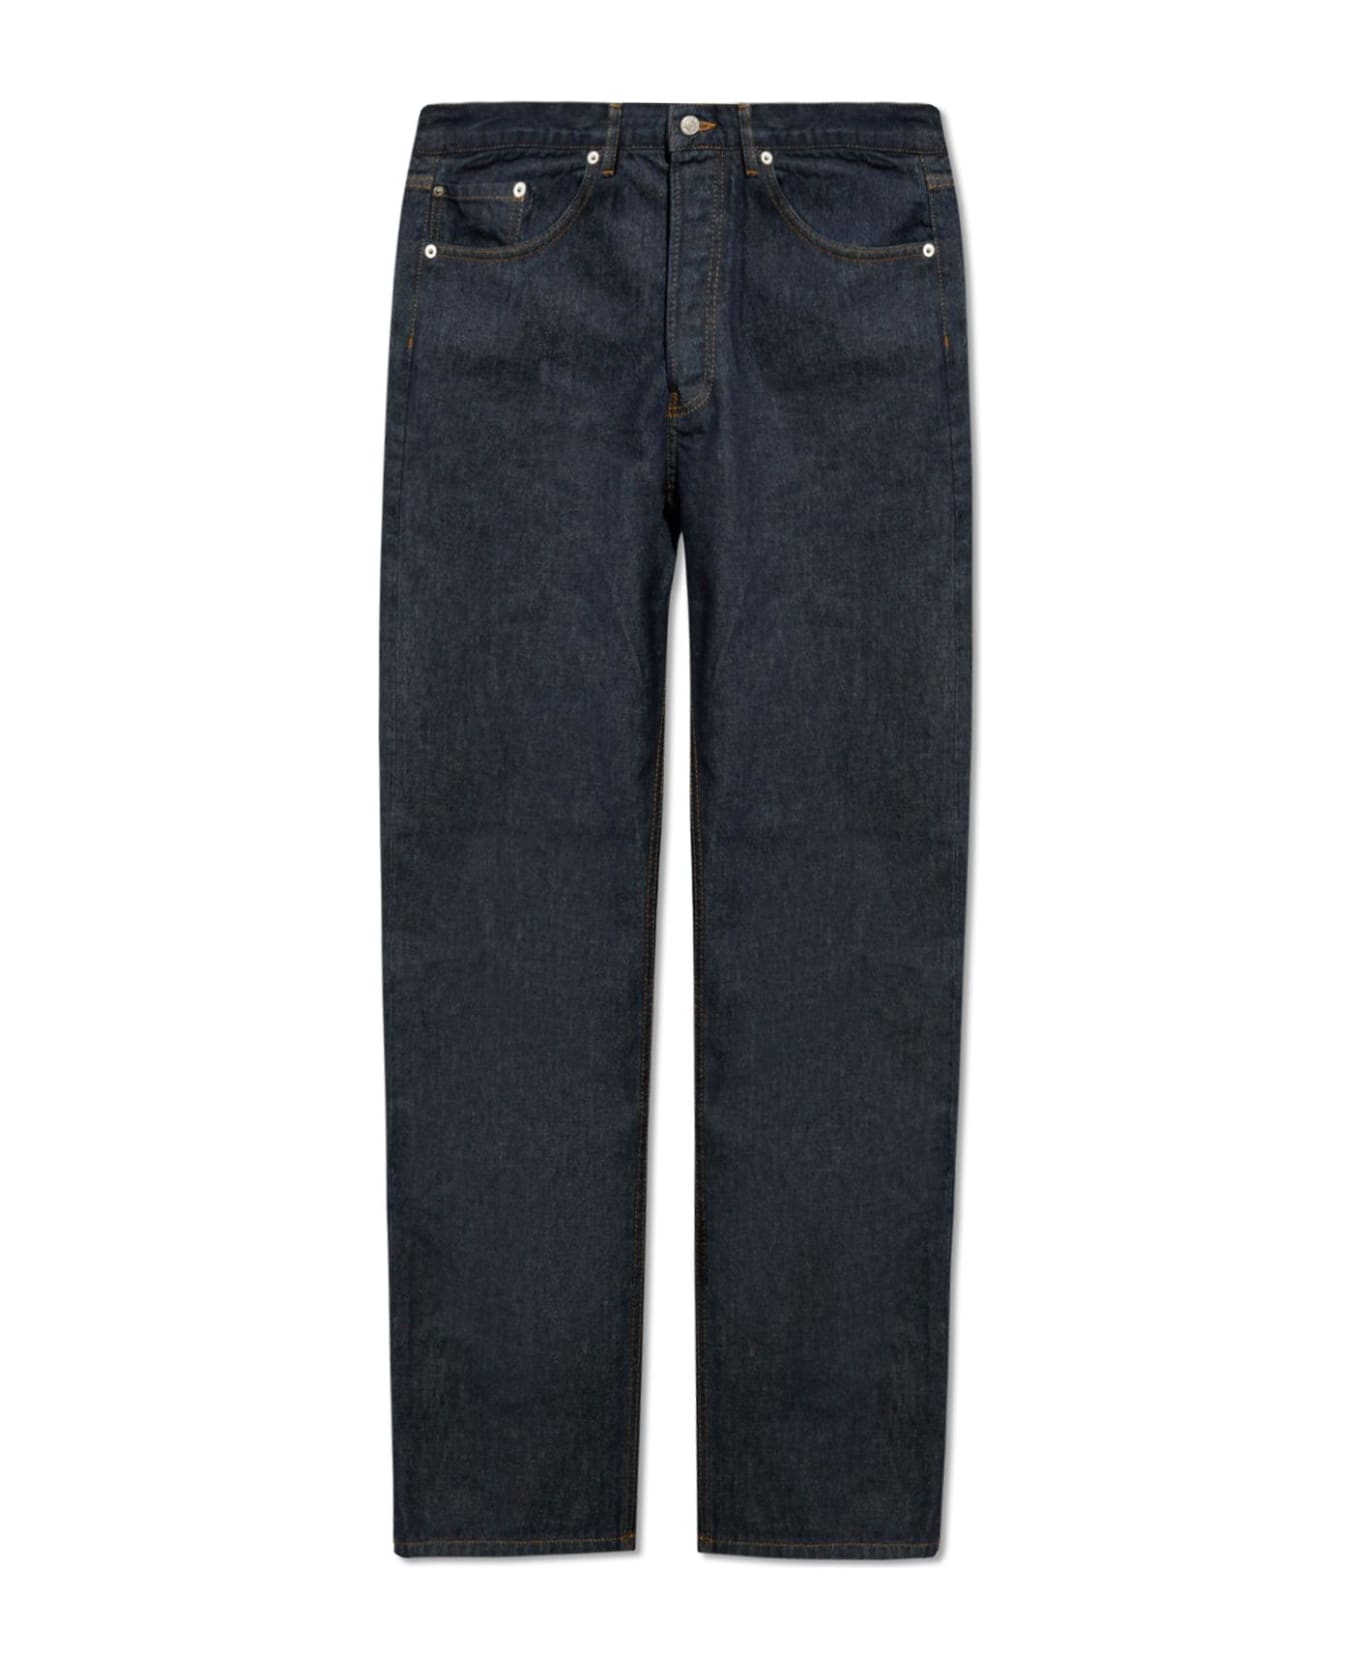 Dries Van Noten Jeans With Straight Legs - INDIGO